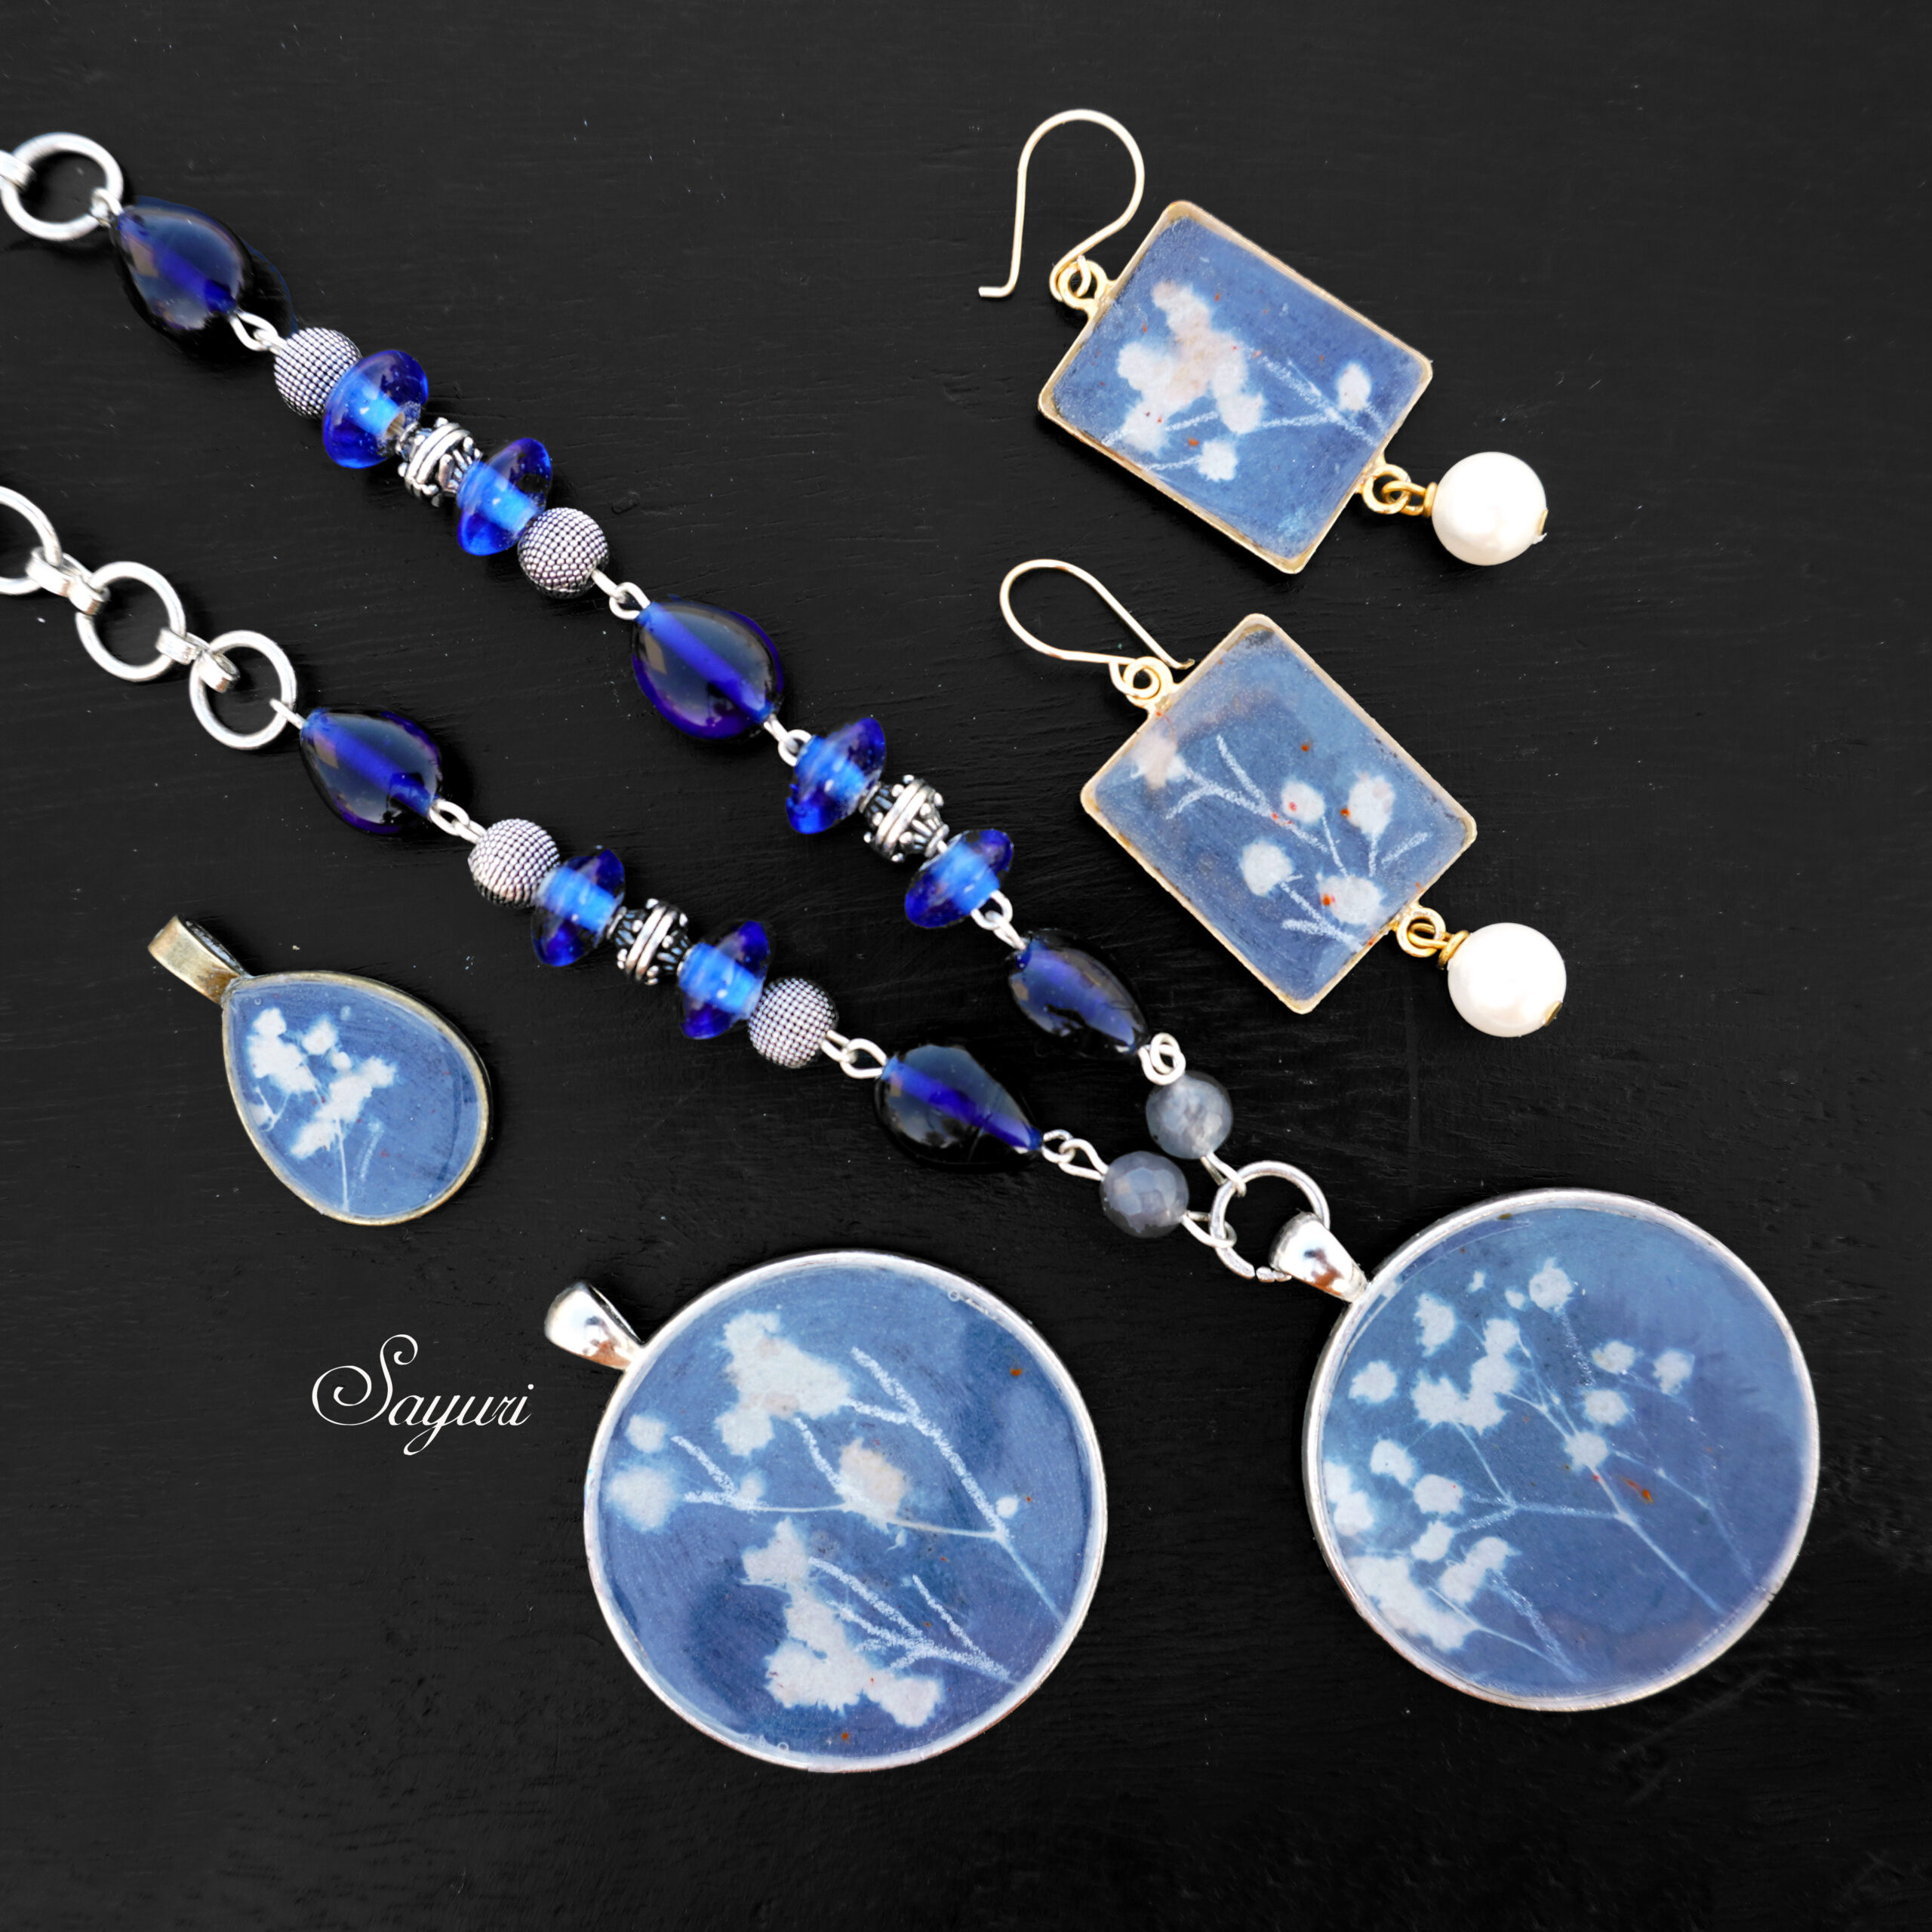 Cyanotype Jewellery tutorial - Sayuri